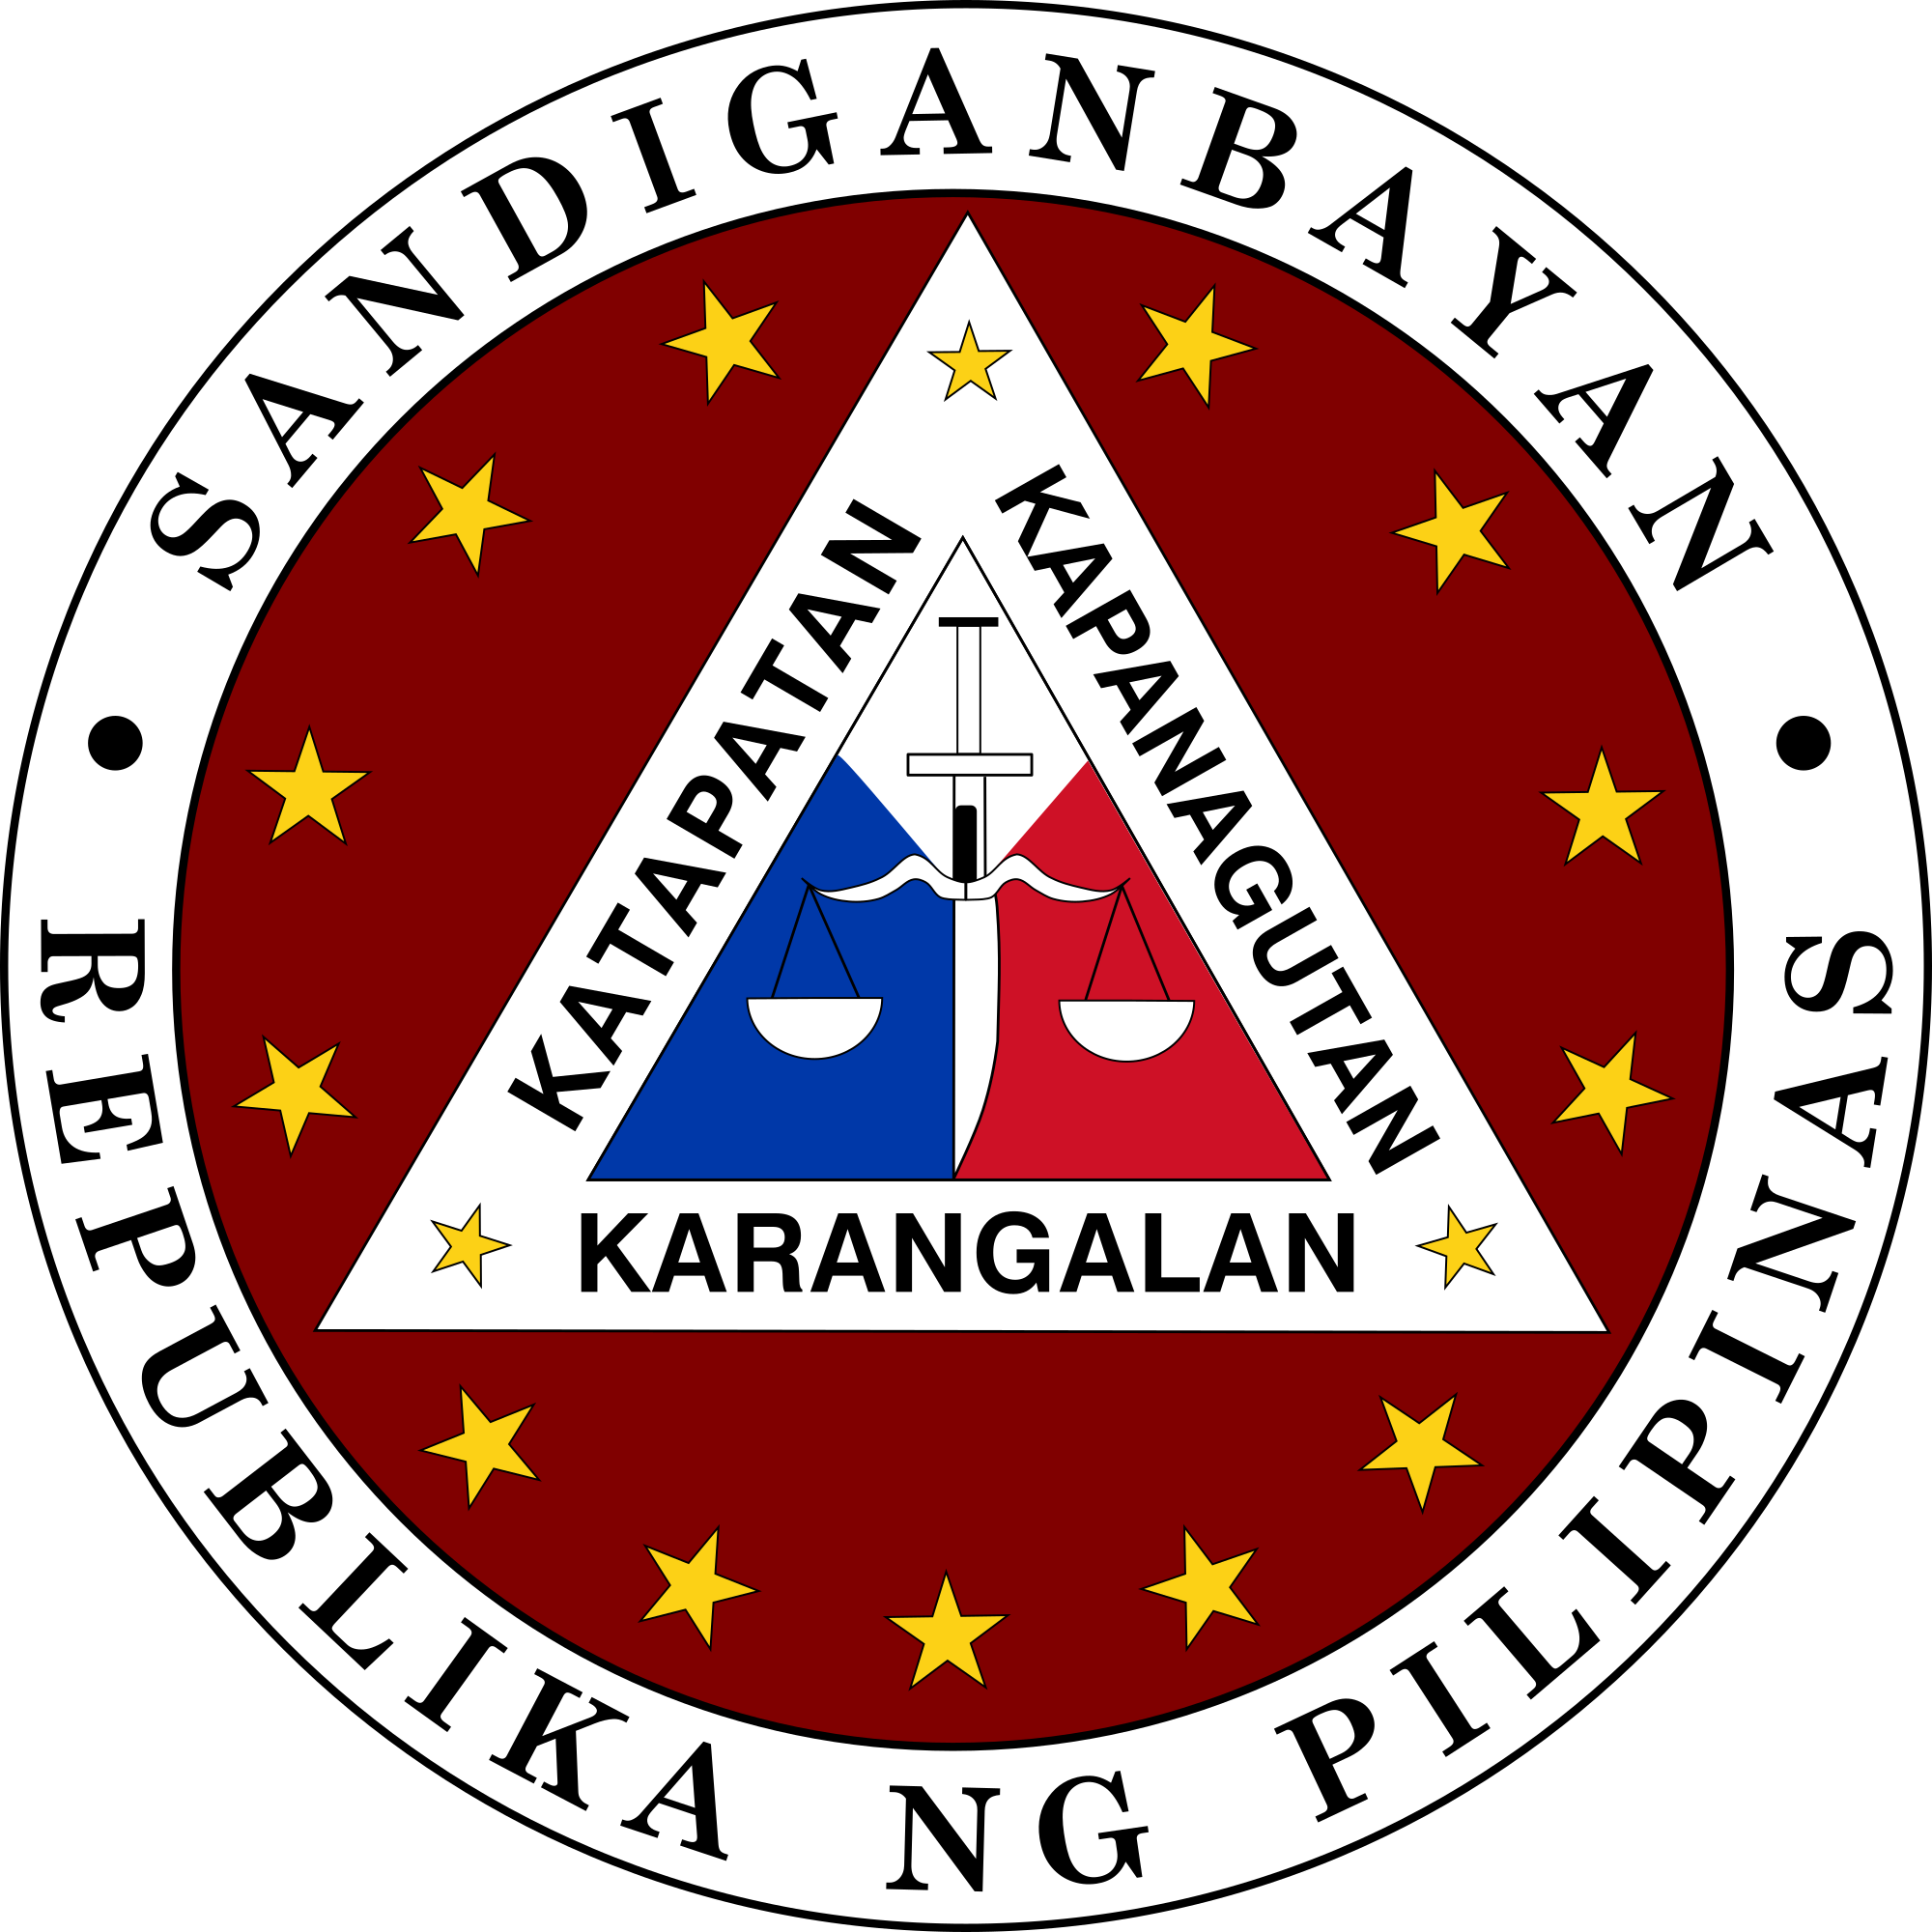 Judge clipart writ certiorari. Sandiganbayan wikipedia antigraft court